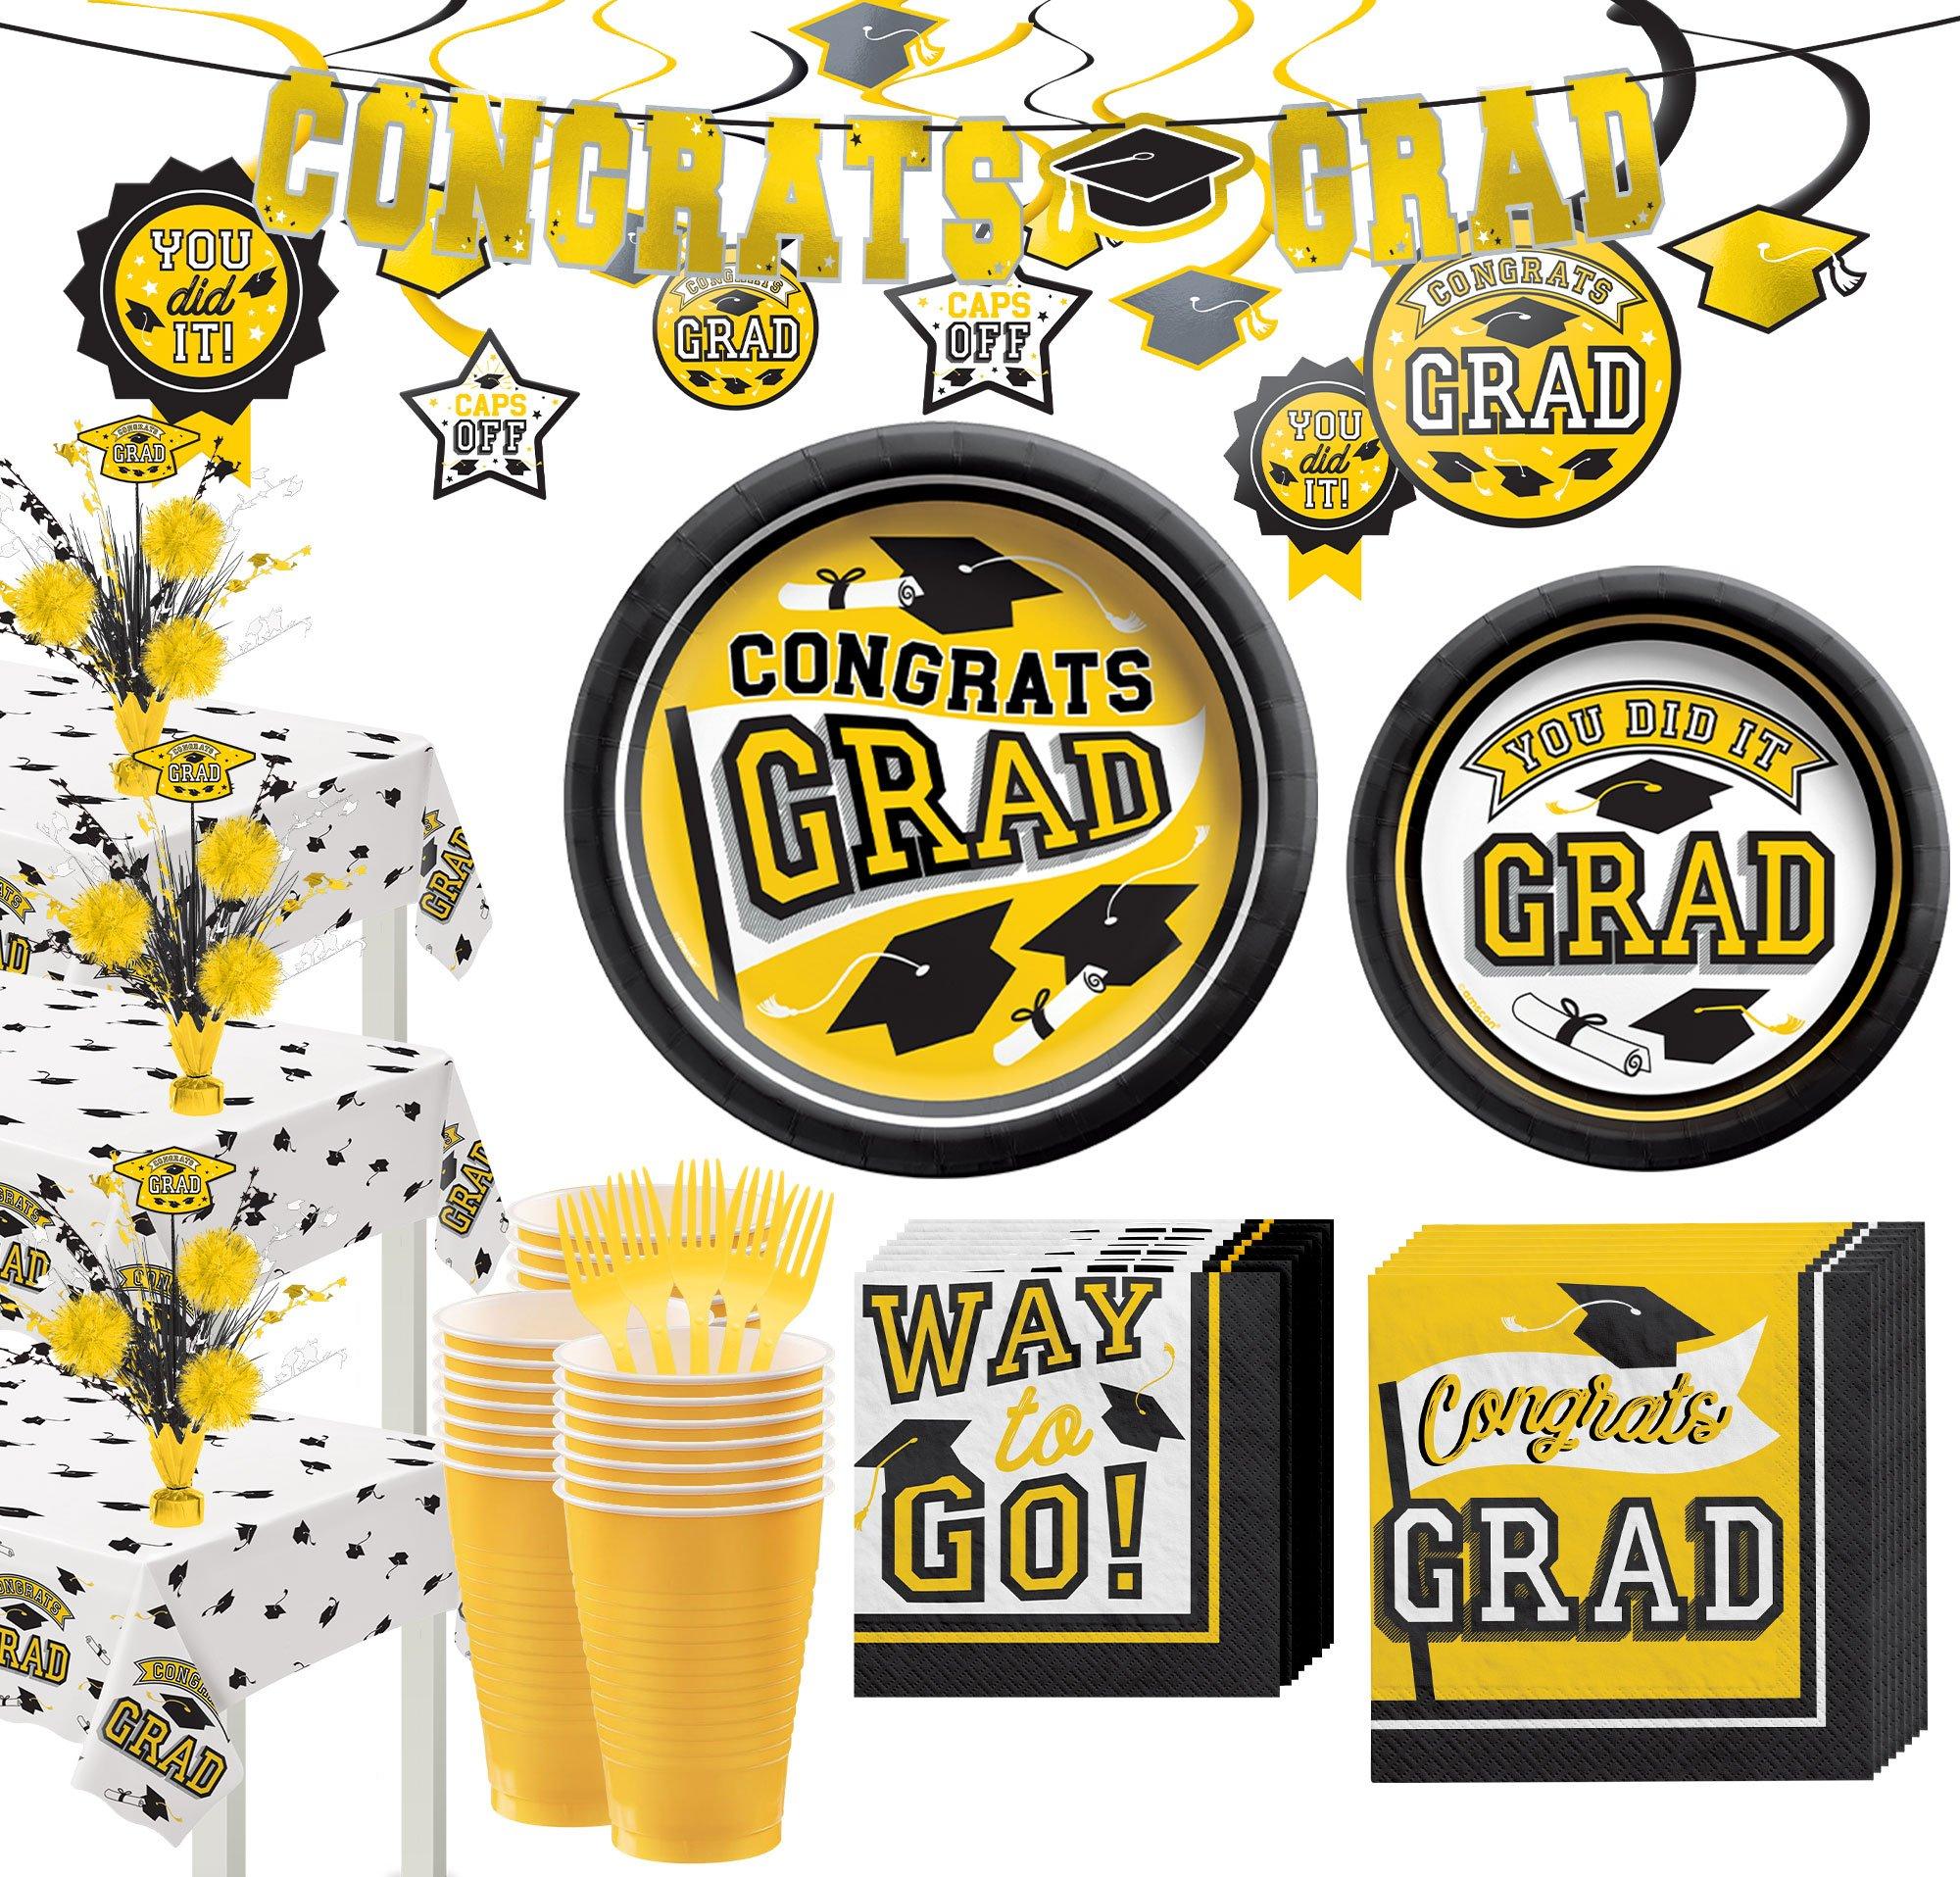 Congrats Grad Graduation Party Kit for 60 Guests